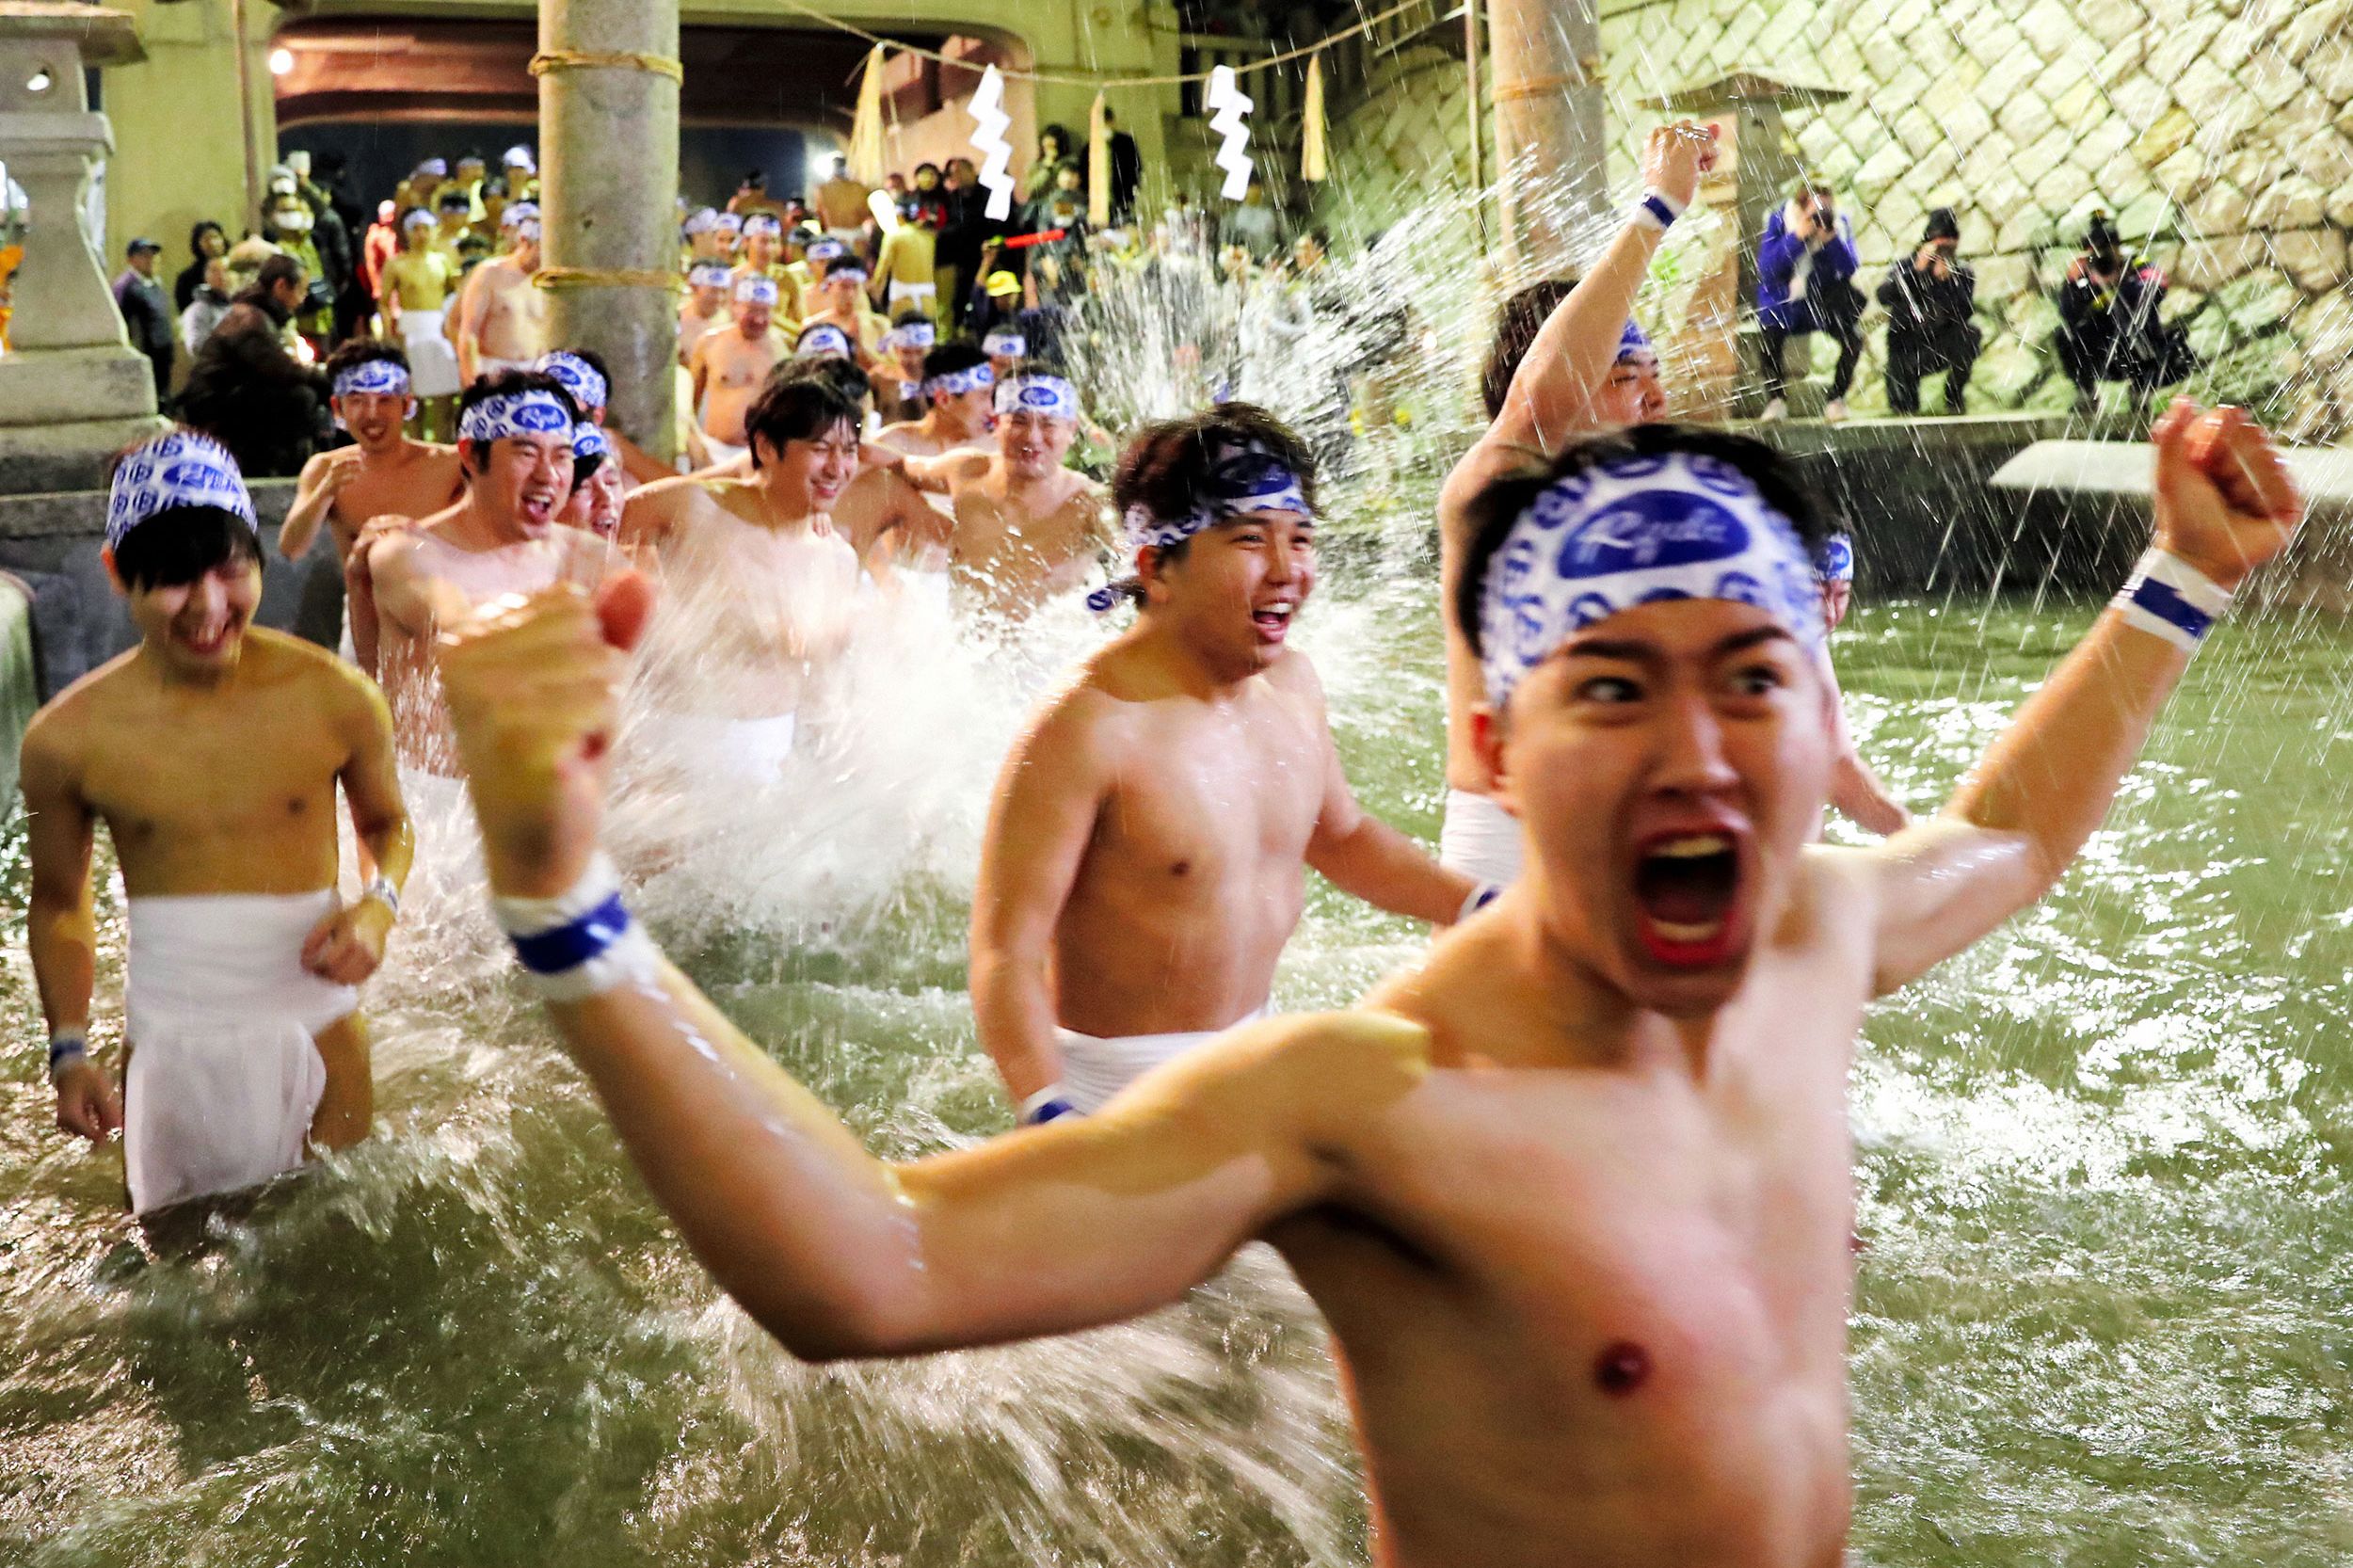 Funny Japan Nude - Naked Festival: Thousands gather for Japan's annual 'Hadaka Matsuri' | CNN